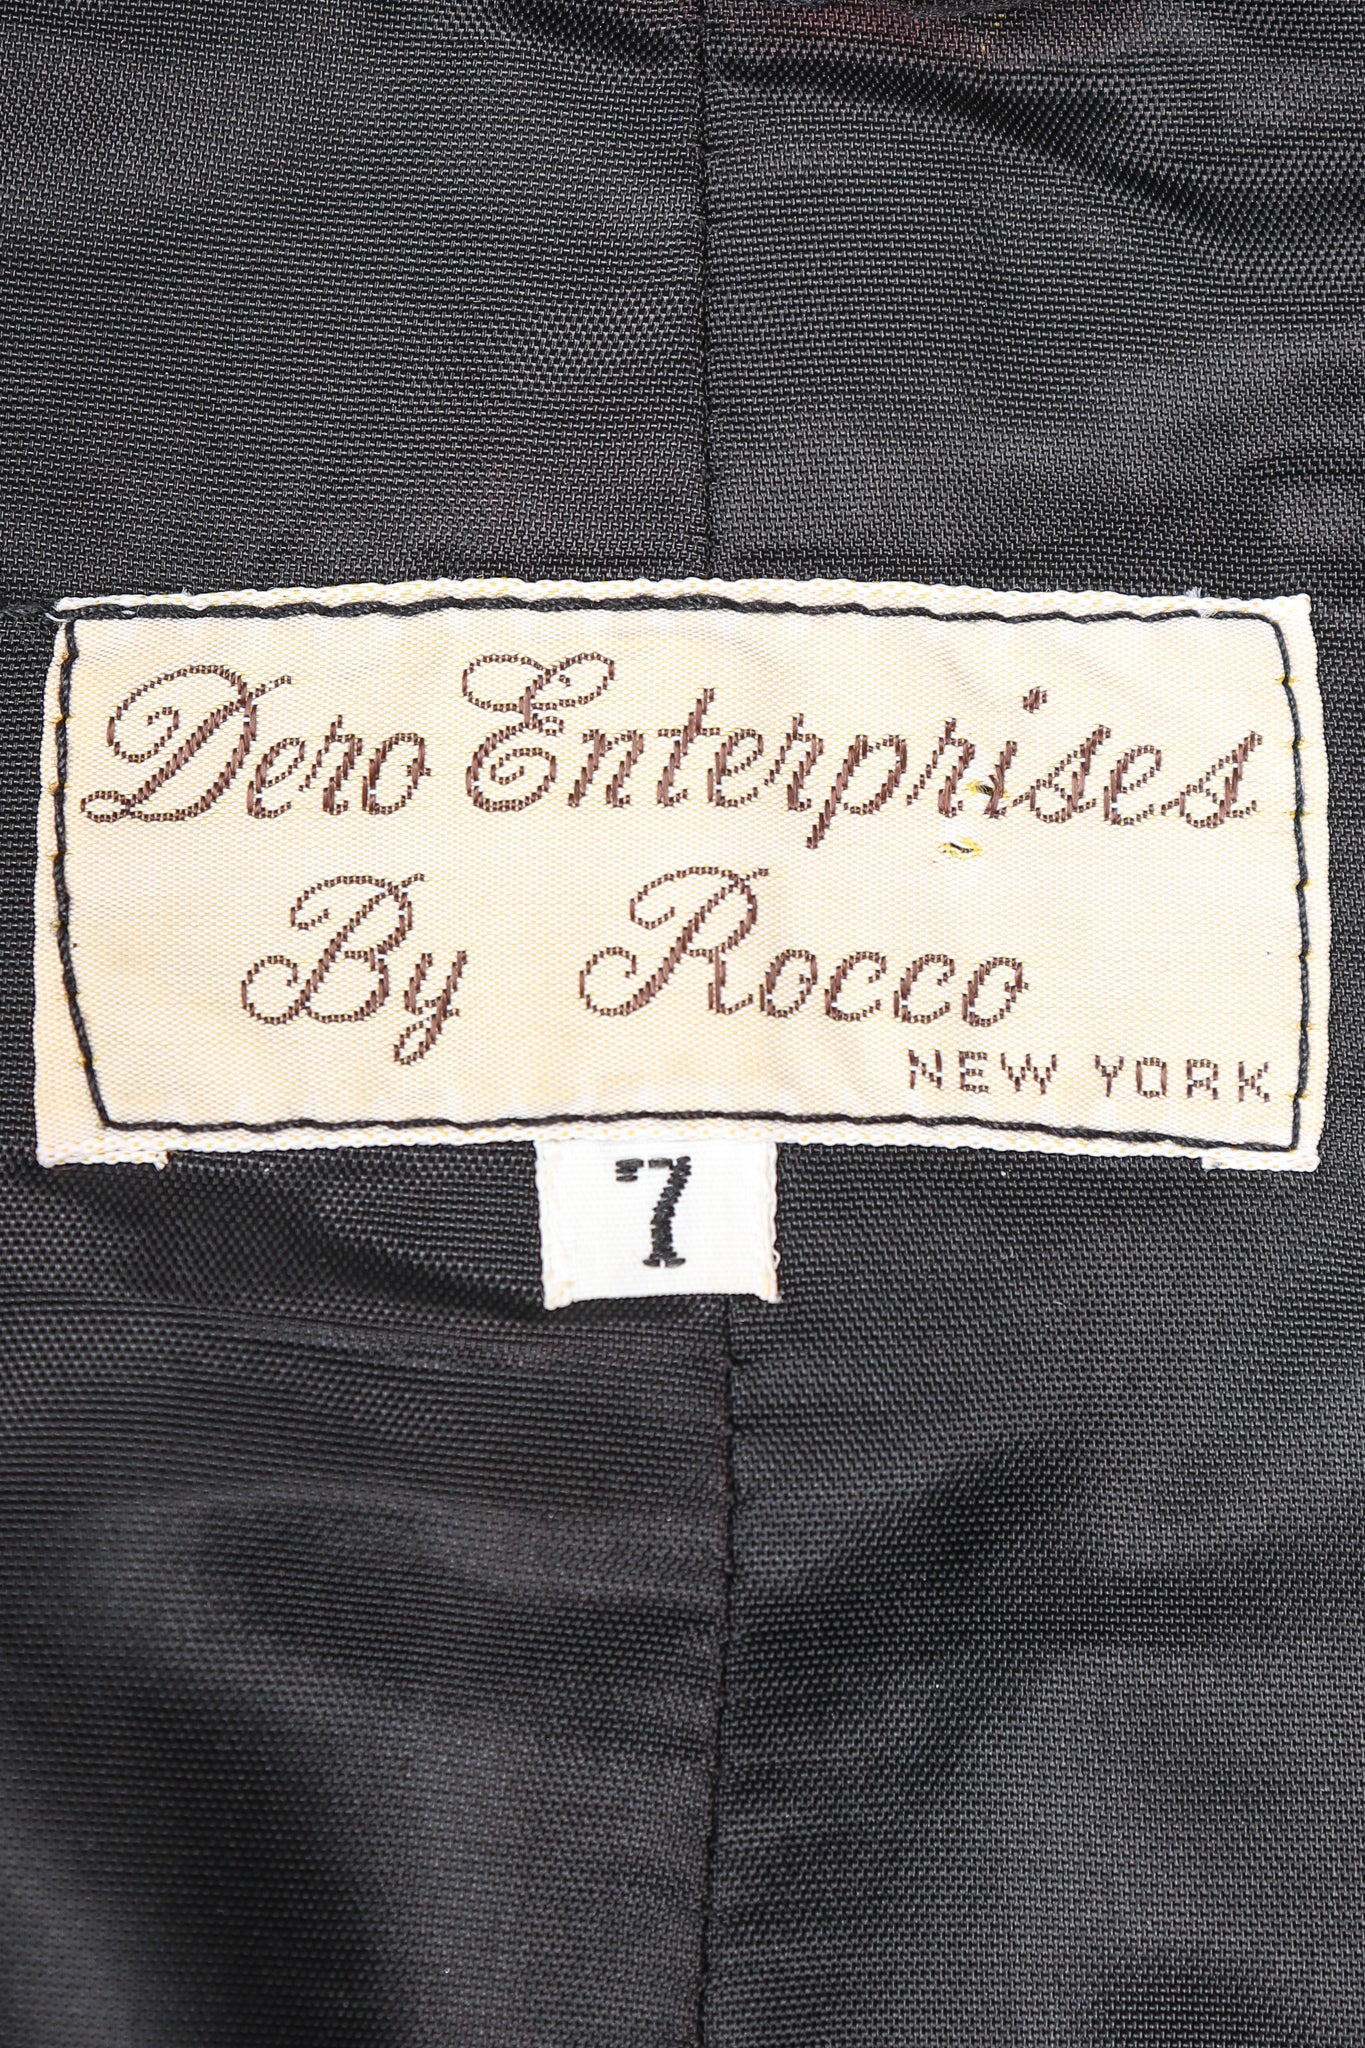 Dero Enterprises by Rocco Label on Black lining fabric at Recess Vintage